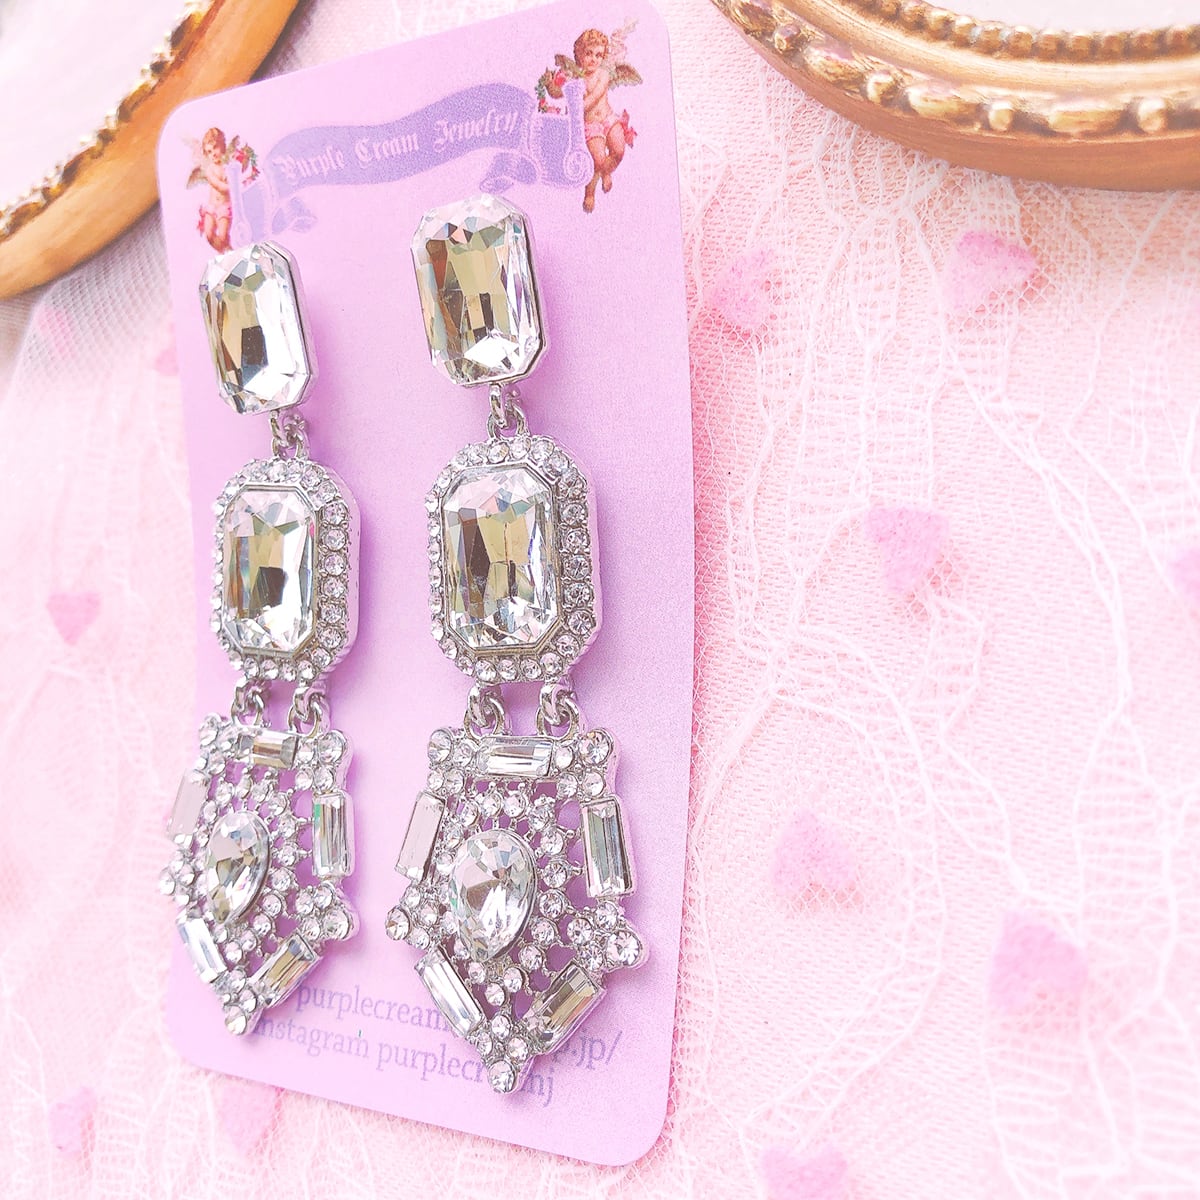 Purple Cream Bijou Earrings P559 IZ*ONE Miyawaki Sakura wearing earrings